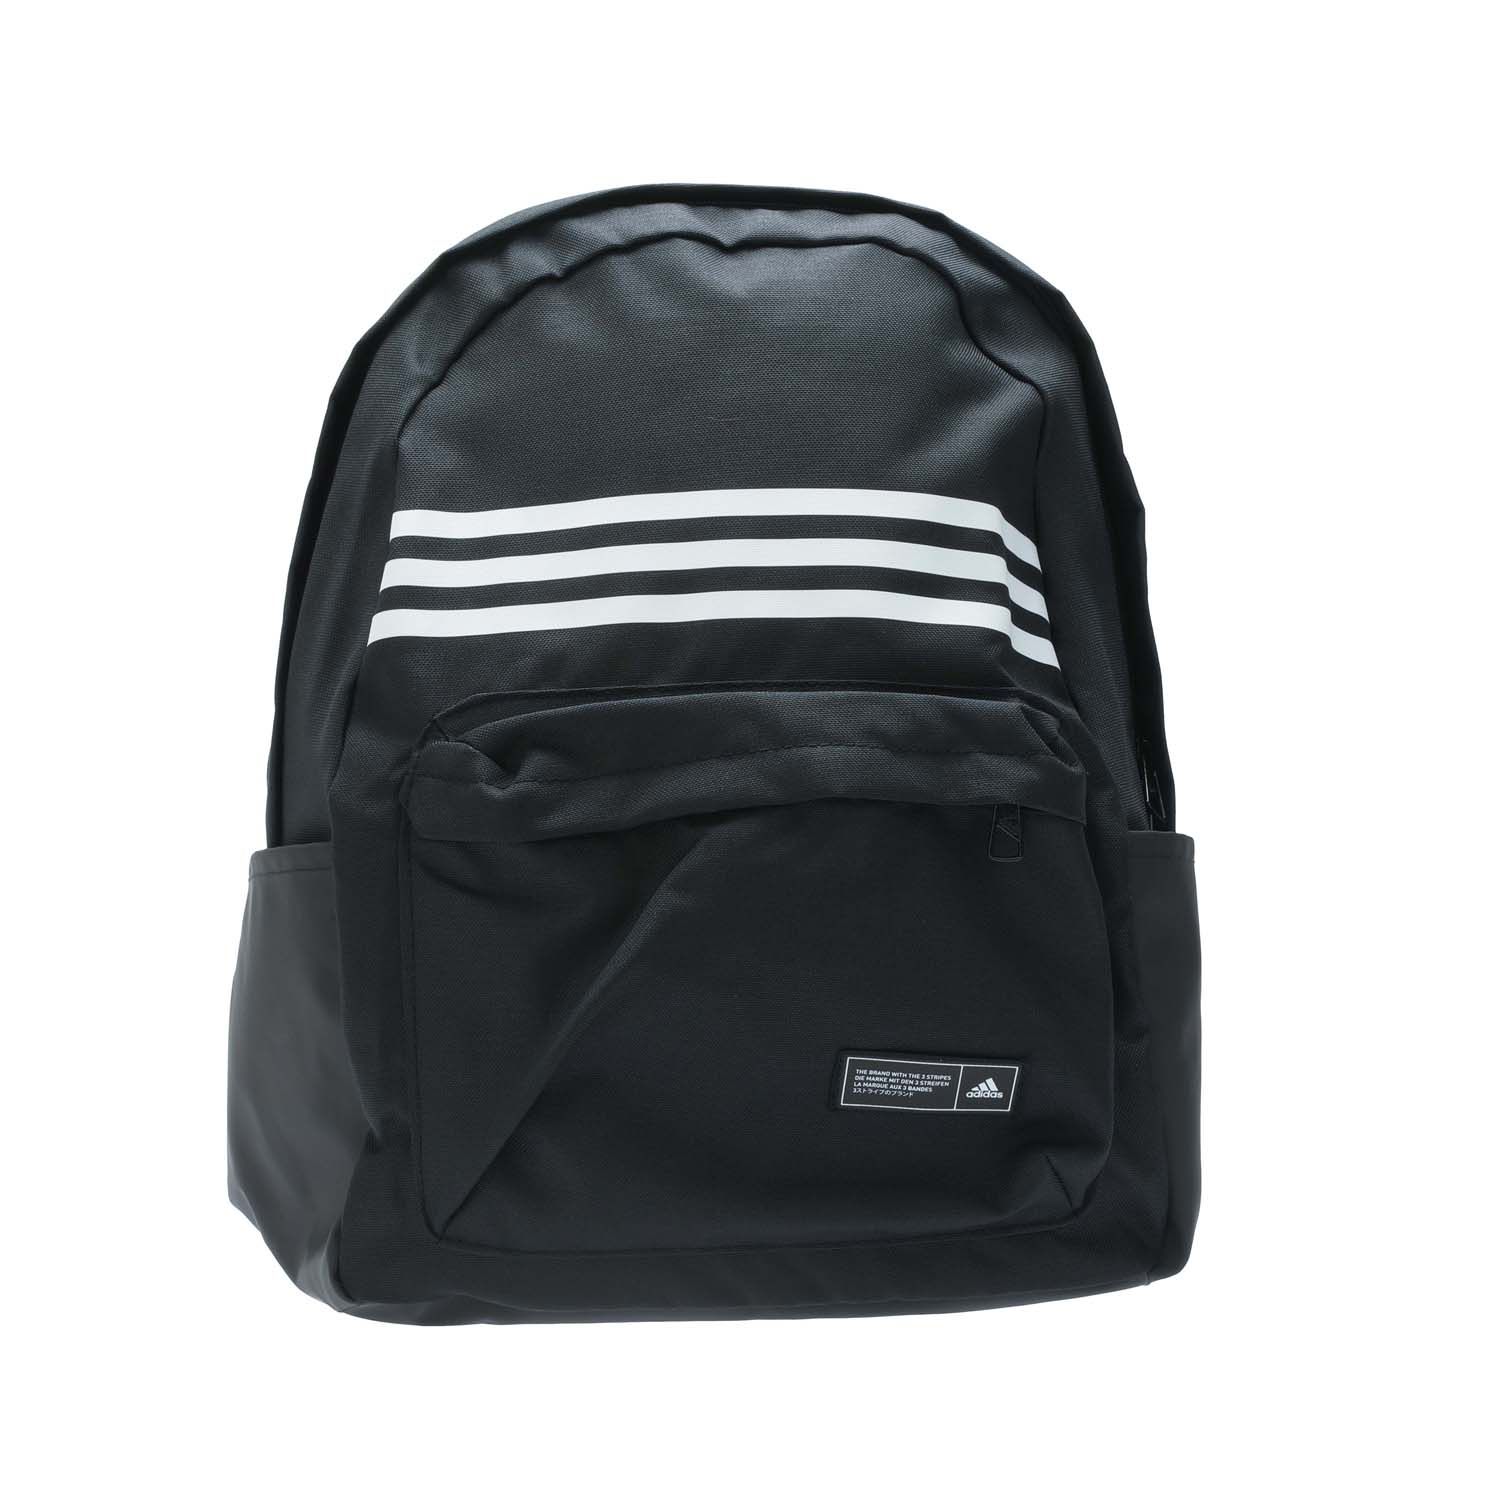 Classic 3 Stripes Backpack